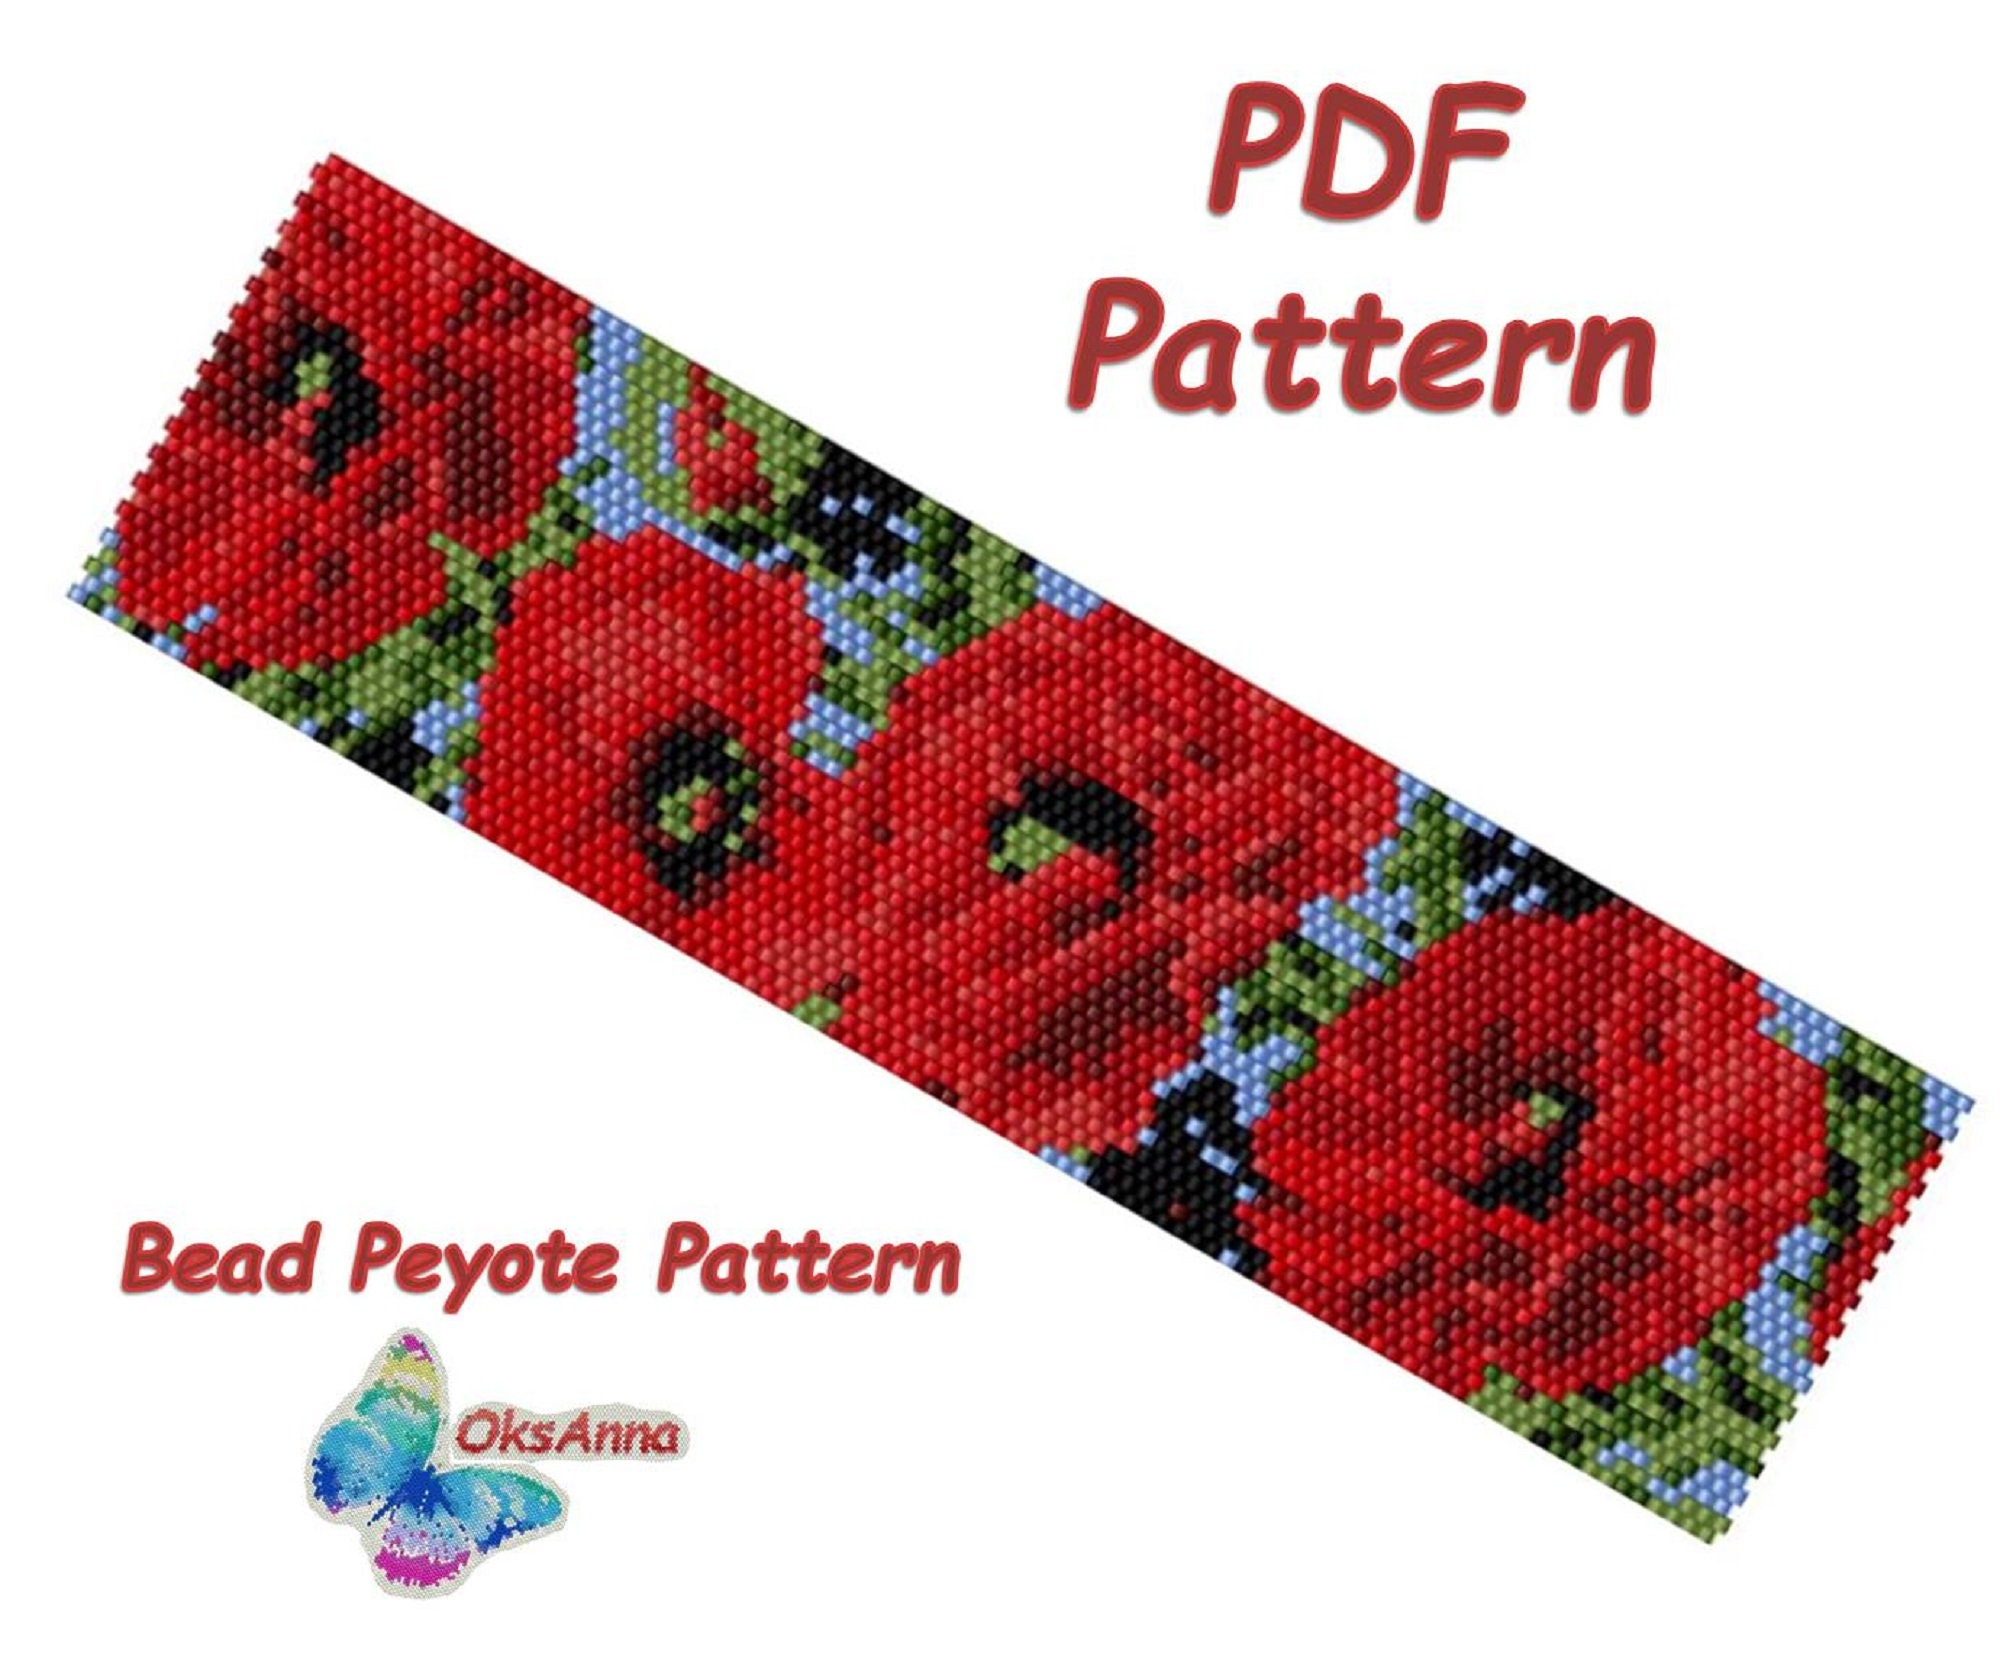 Striped Seed Bead Bracelets – Poppy Jewelry Designs